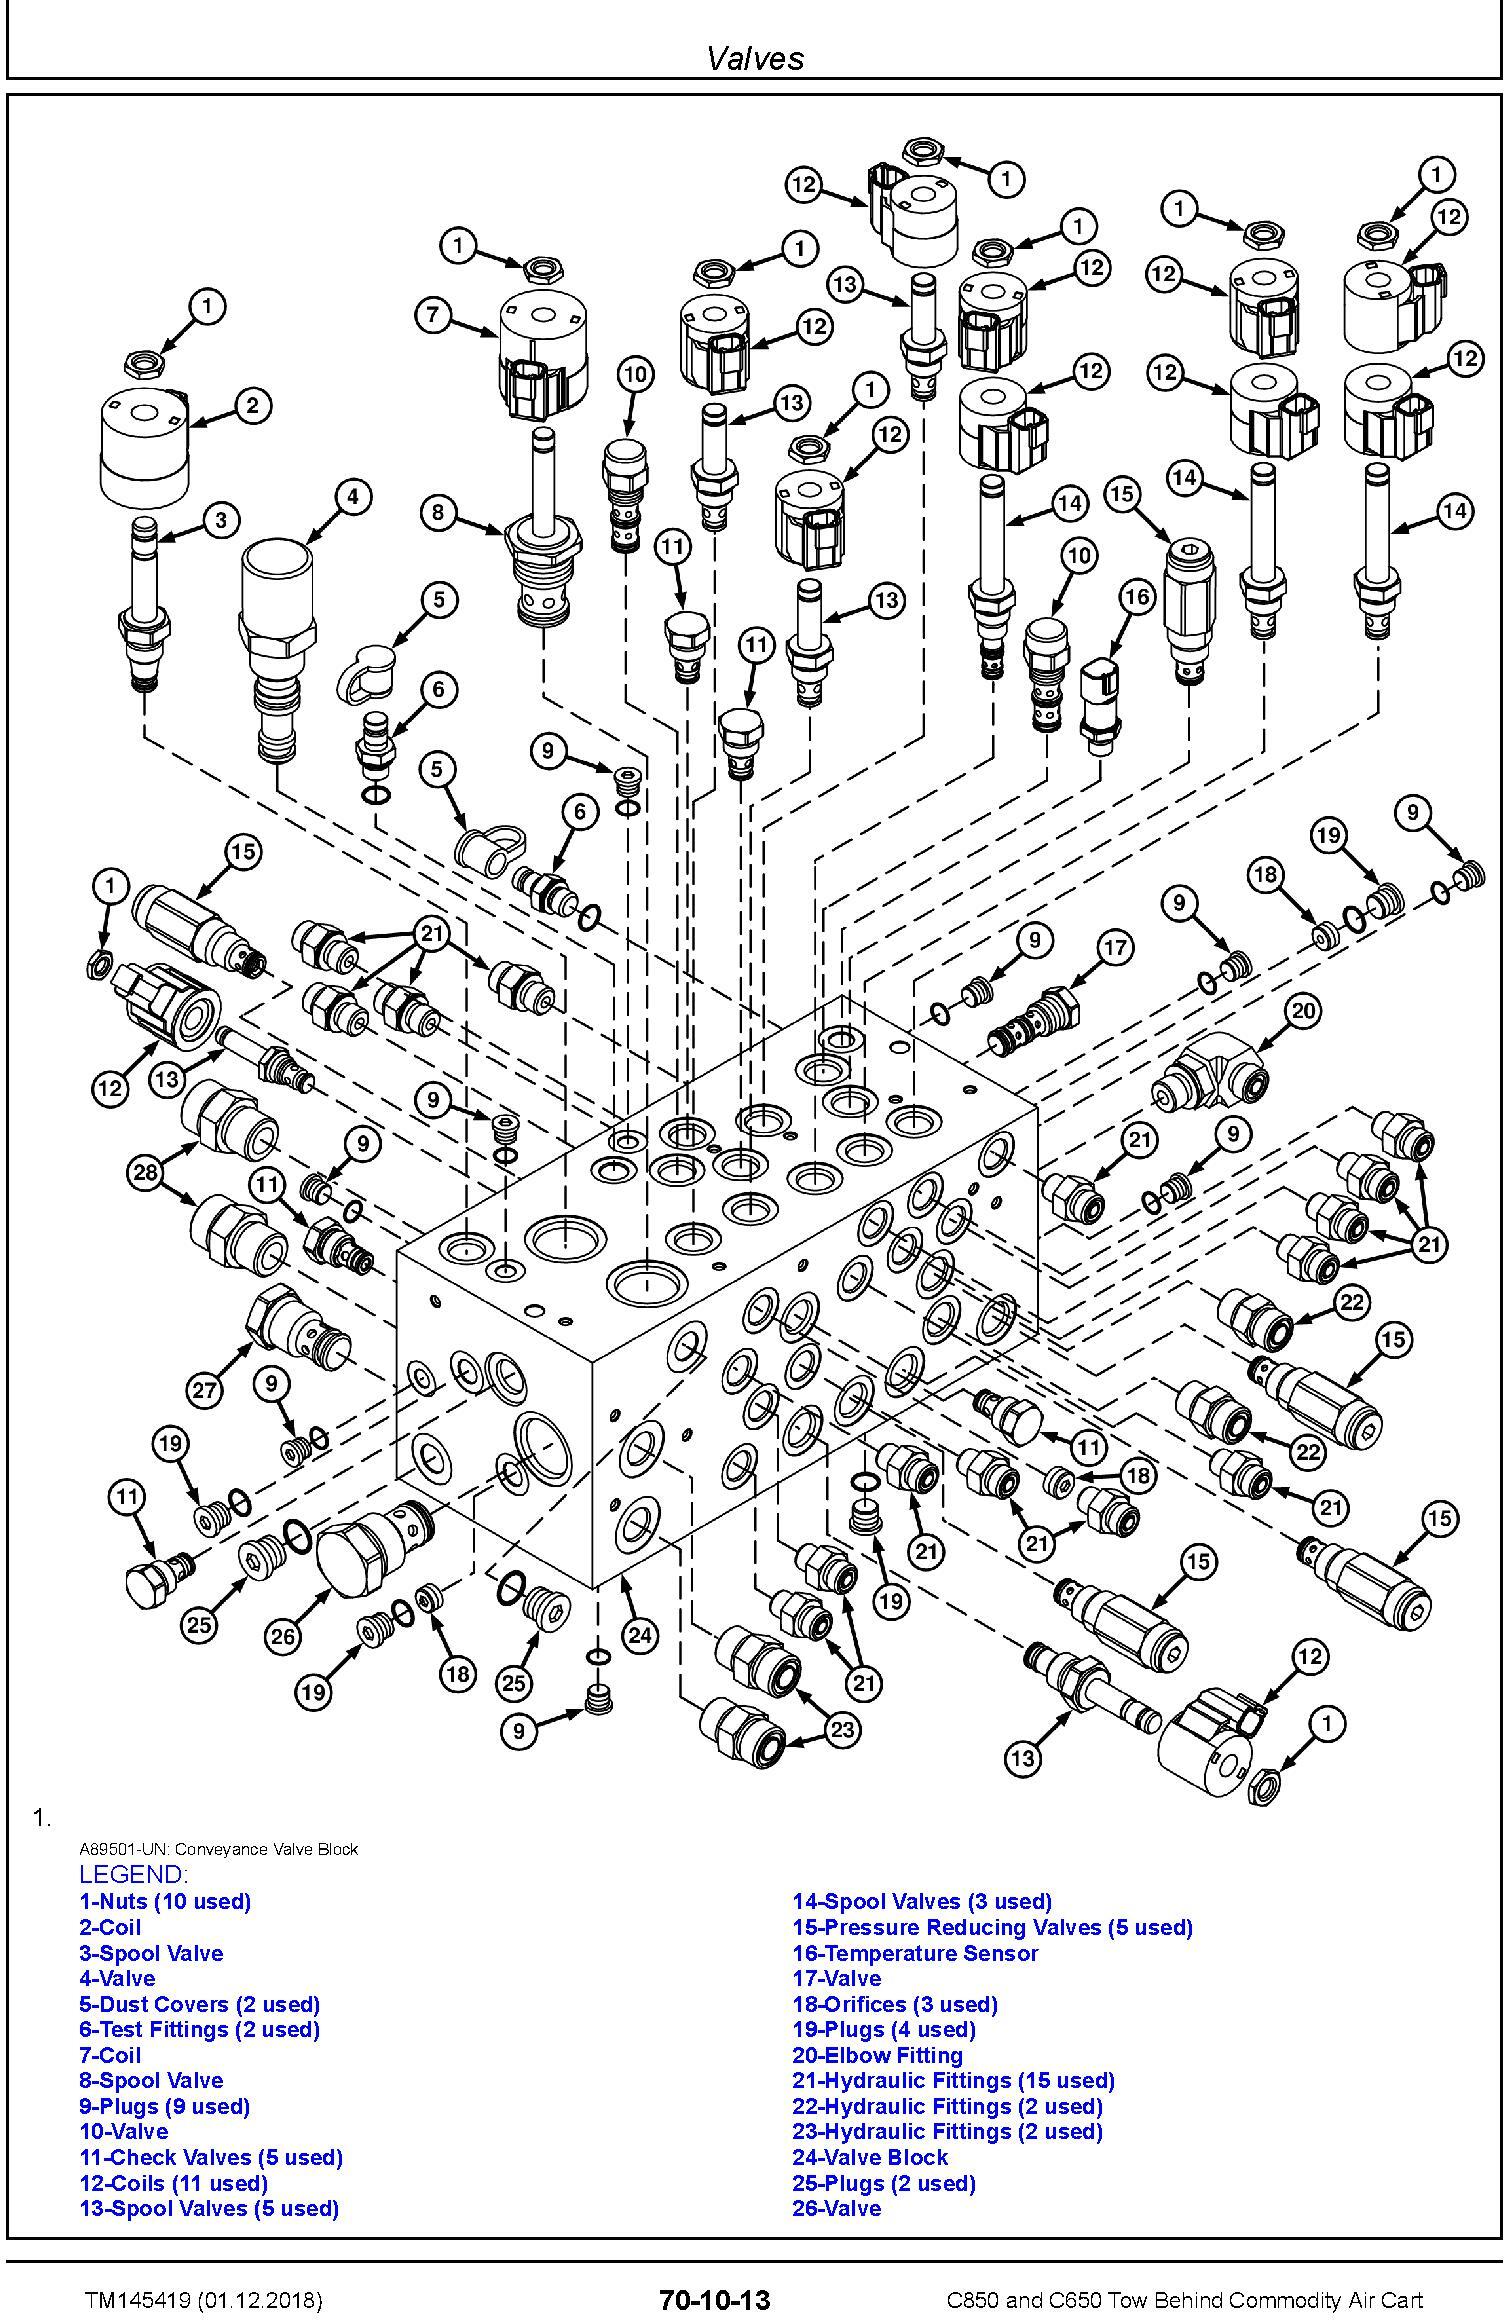 John Deere C850 and C650 Tow Behind Commodity Air Cart Repair Technical Service Manual (TM145419) - 1